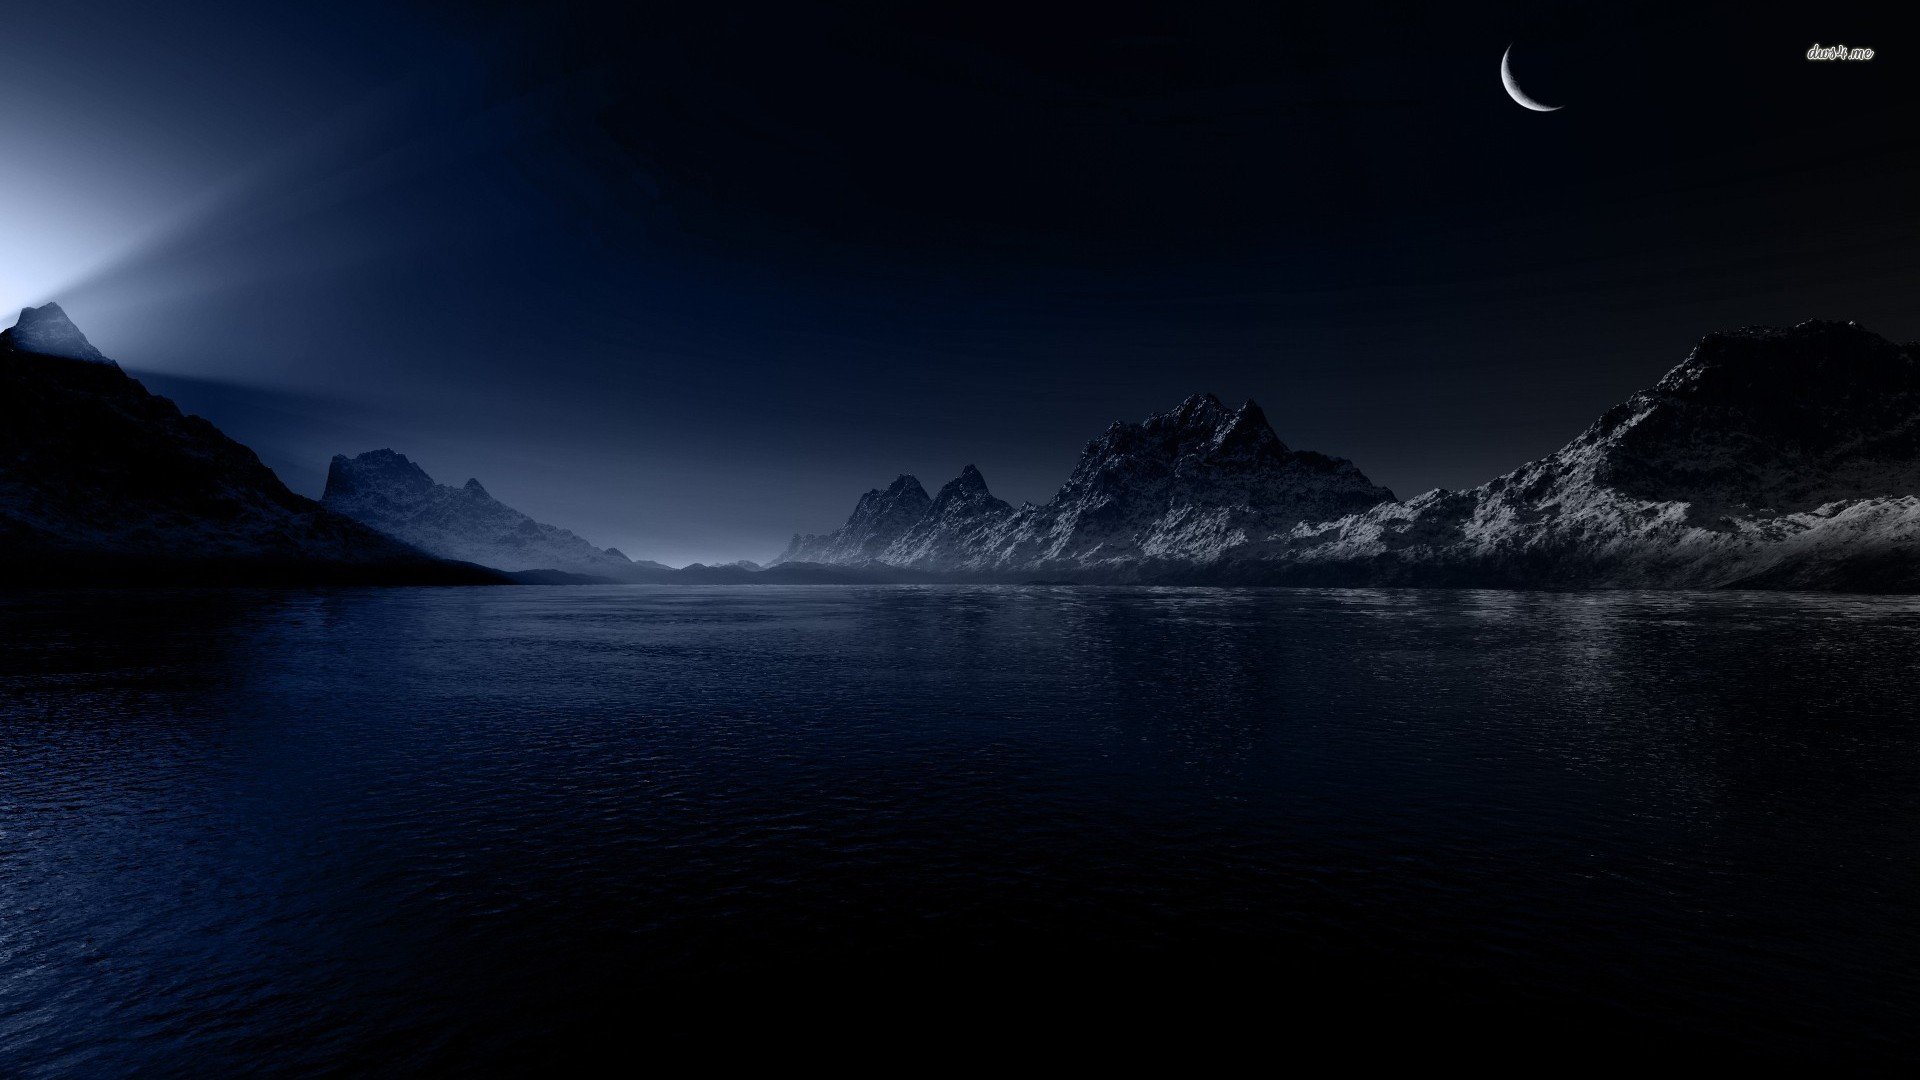 Dark Night Over The Mountain Lake Wallpaper   MixHD wallpapers